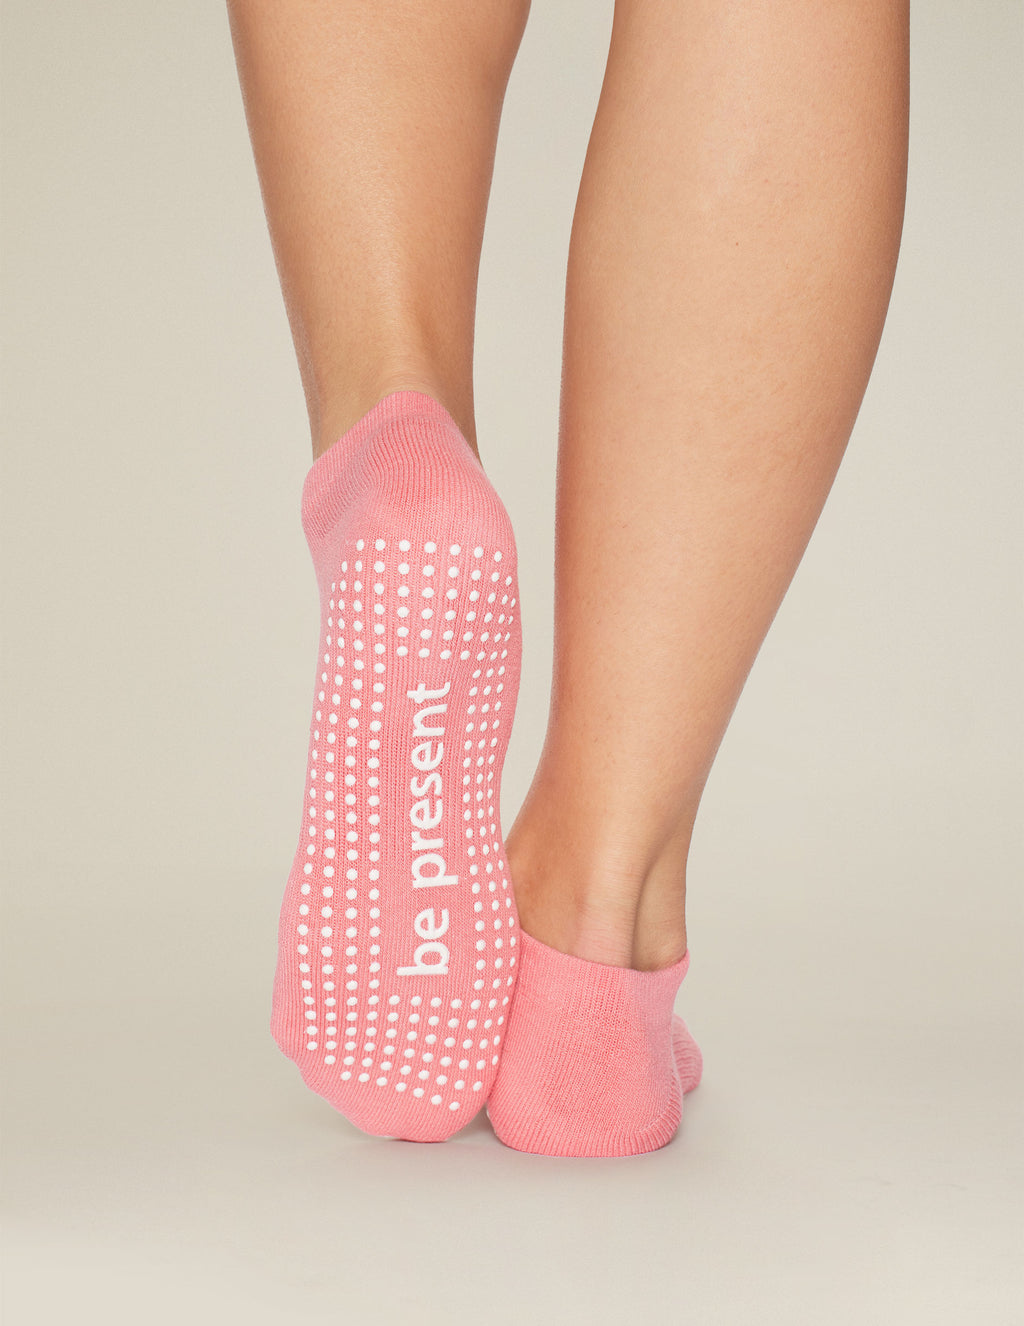 Sticky Be Present Grip Socks Secondary Image